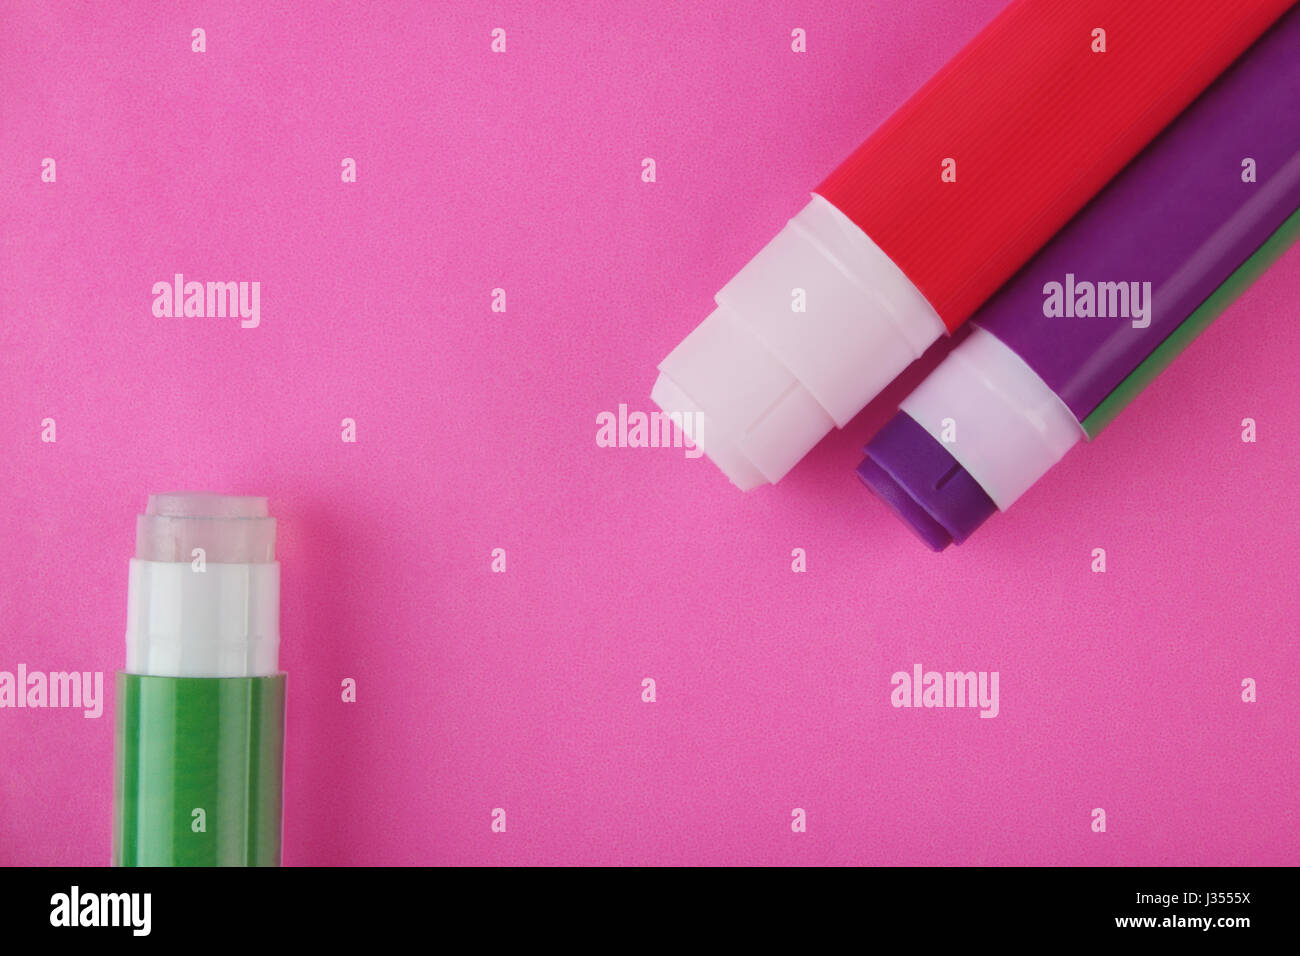 Glue Stick on Pink Background Stock Photo